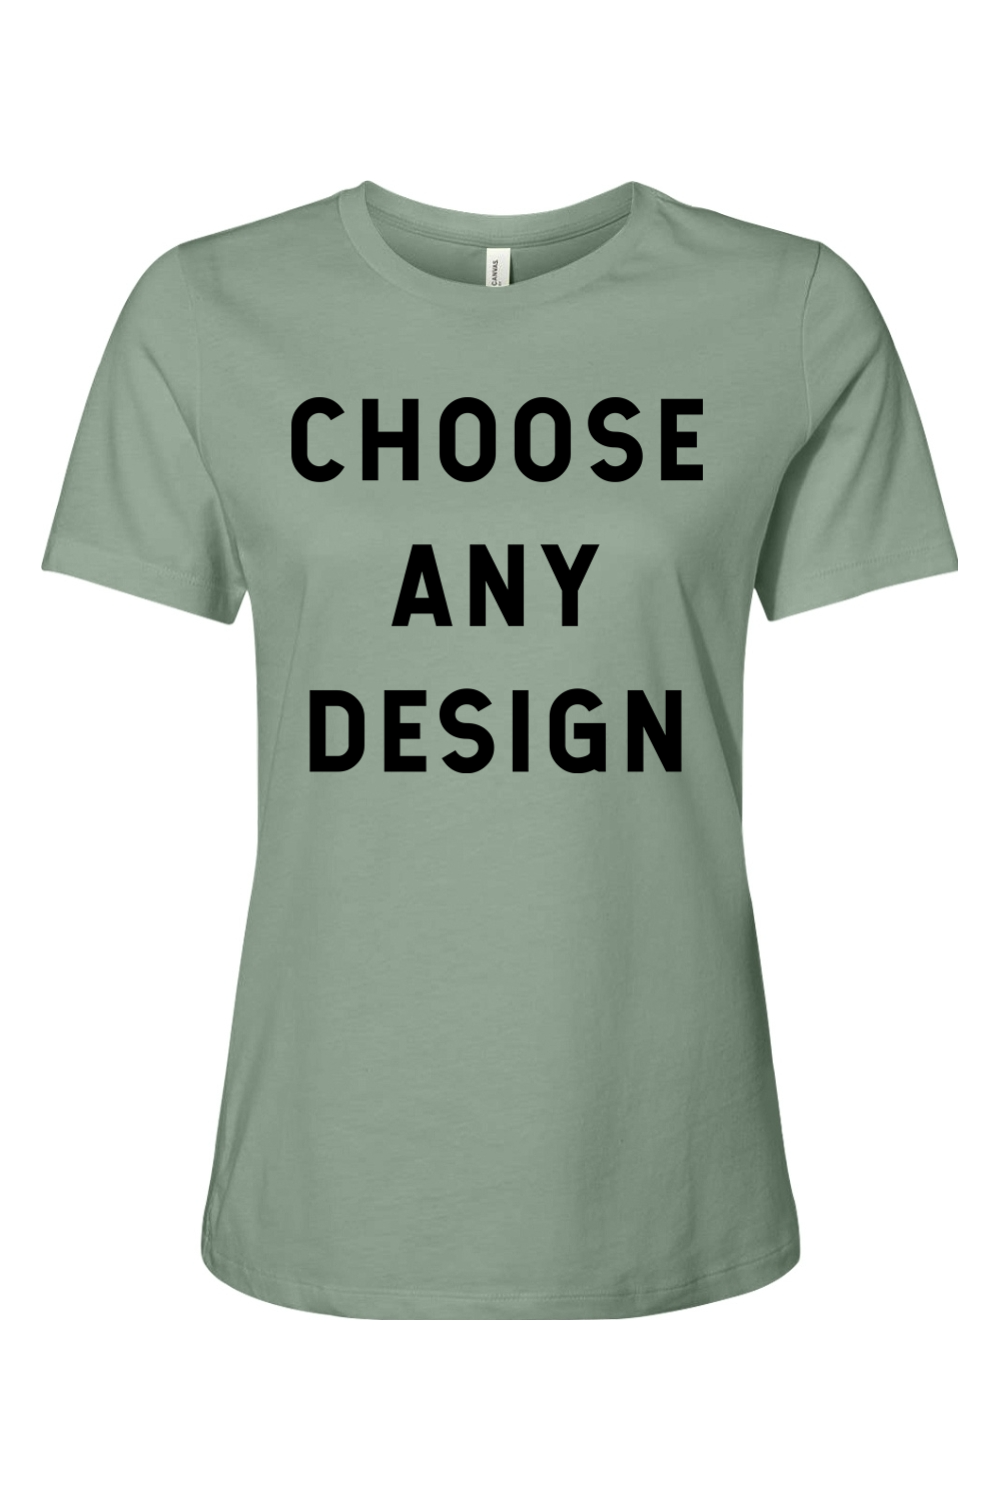 Choose Any Design - Ladies Tee - Yinzylvania